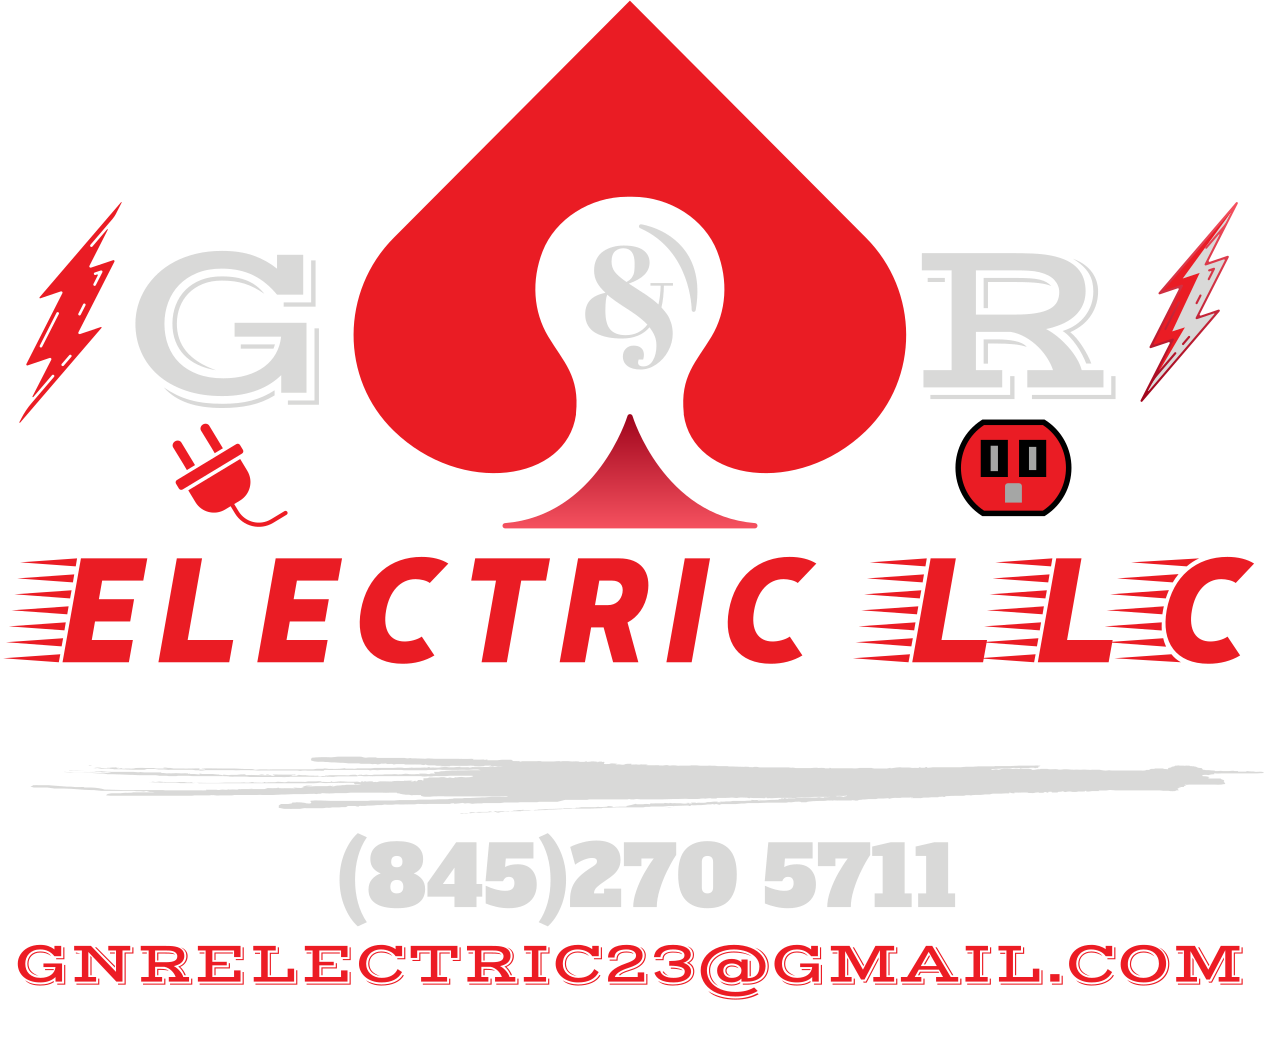  Electric LLC's logo